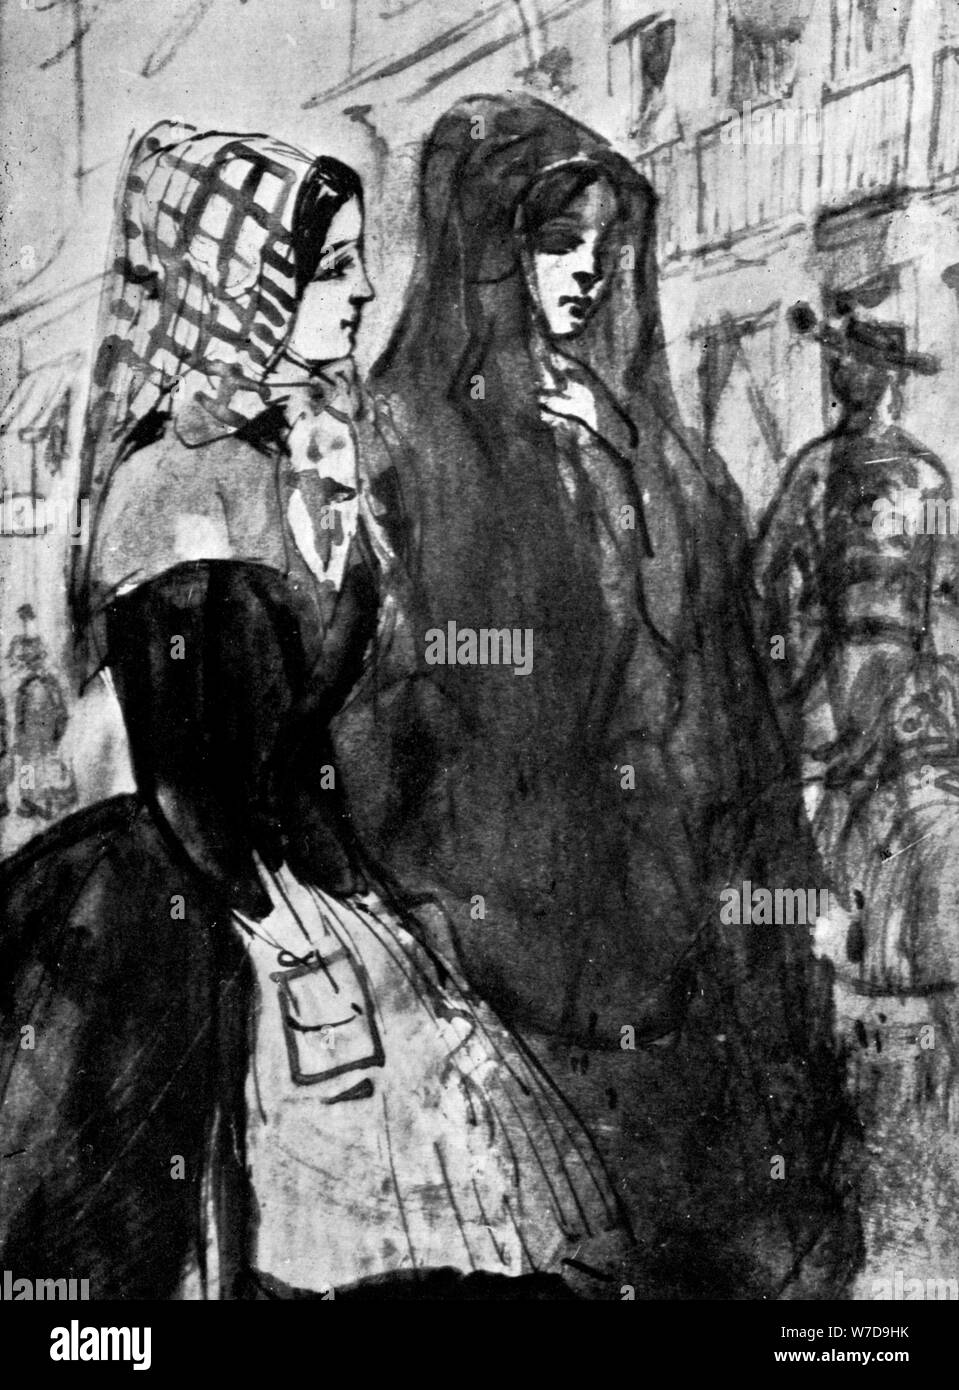 19th century woman bonnet Black and White Stock Photos & Images - Alamy